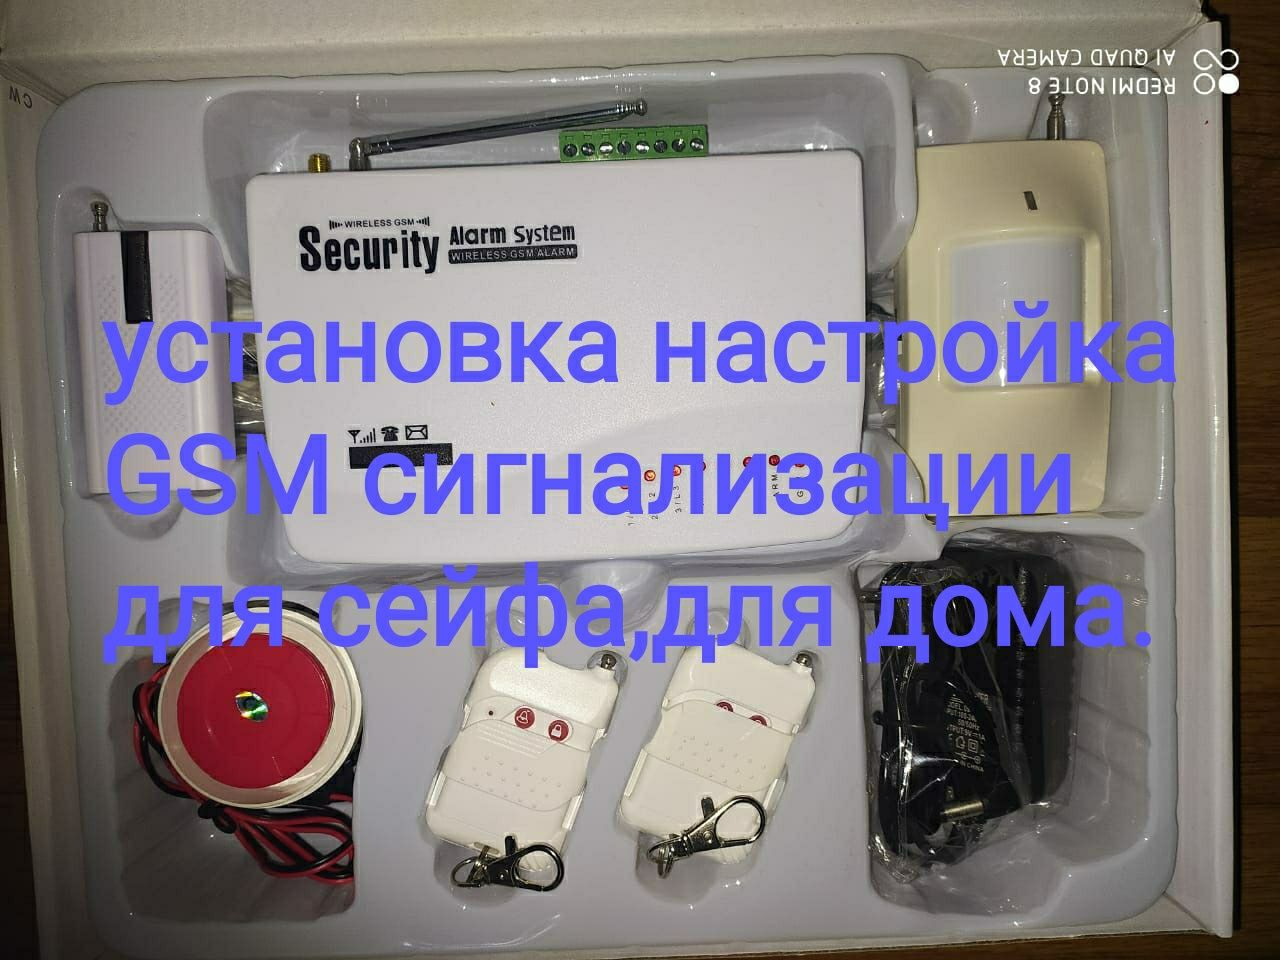 GSM Сигнализация для сейфа,дома,дачи,гаража